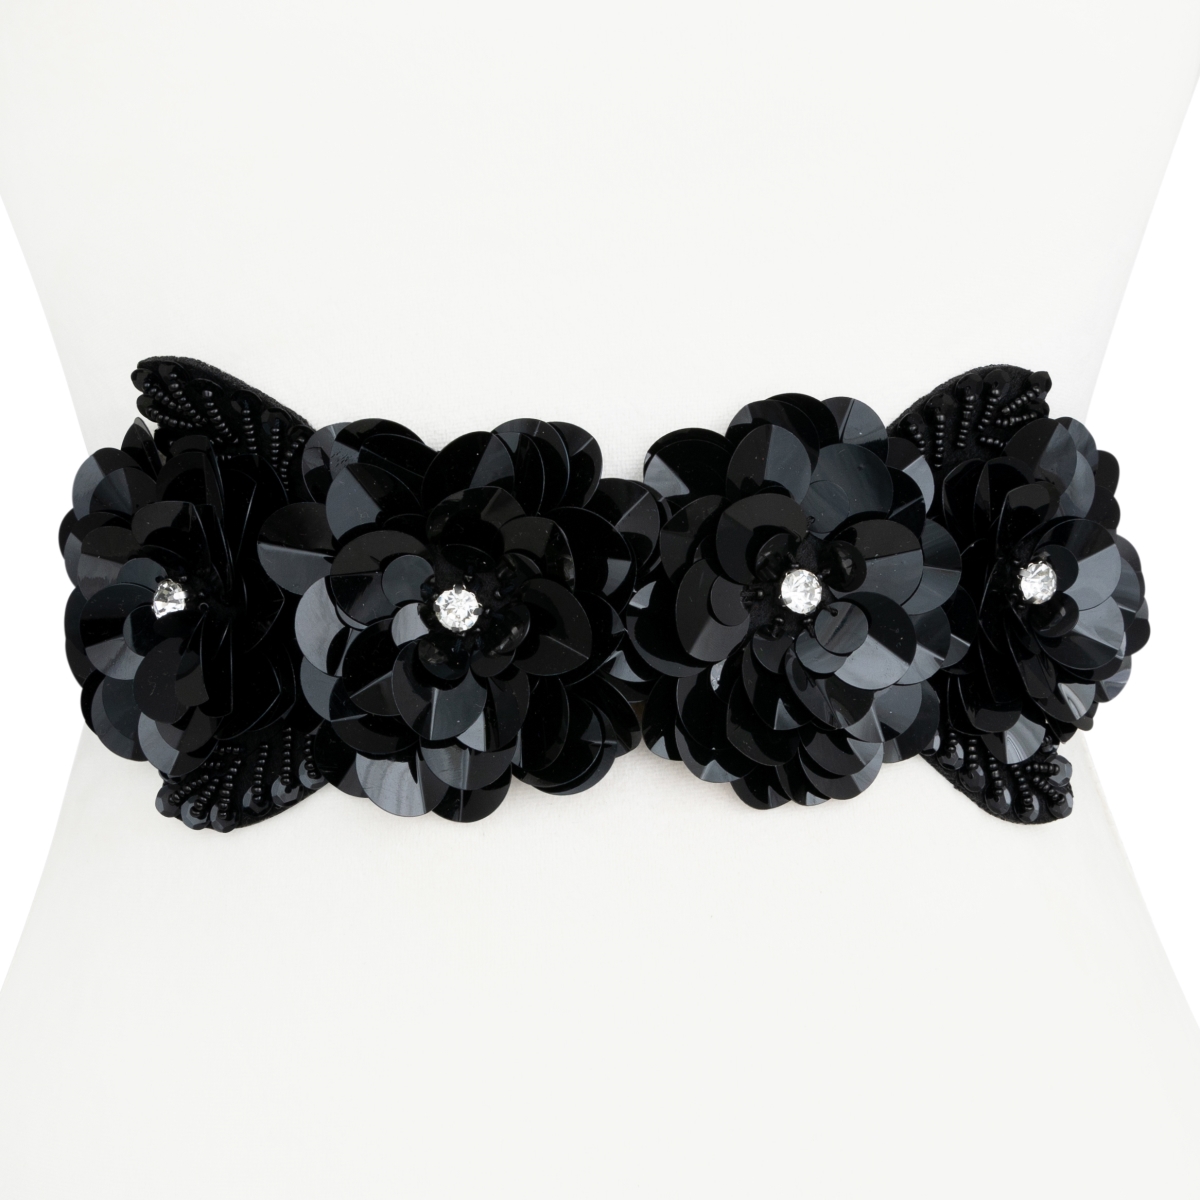 Wc15blk Womens Designer Sequin Floral Stretch Belt, Black - Small & Medium